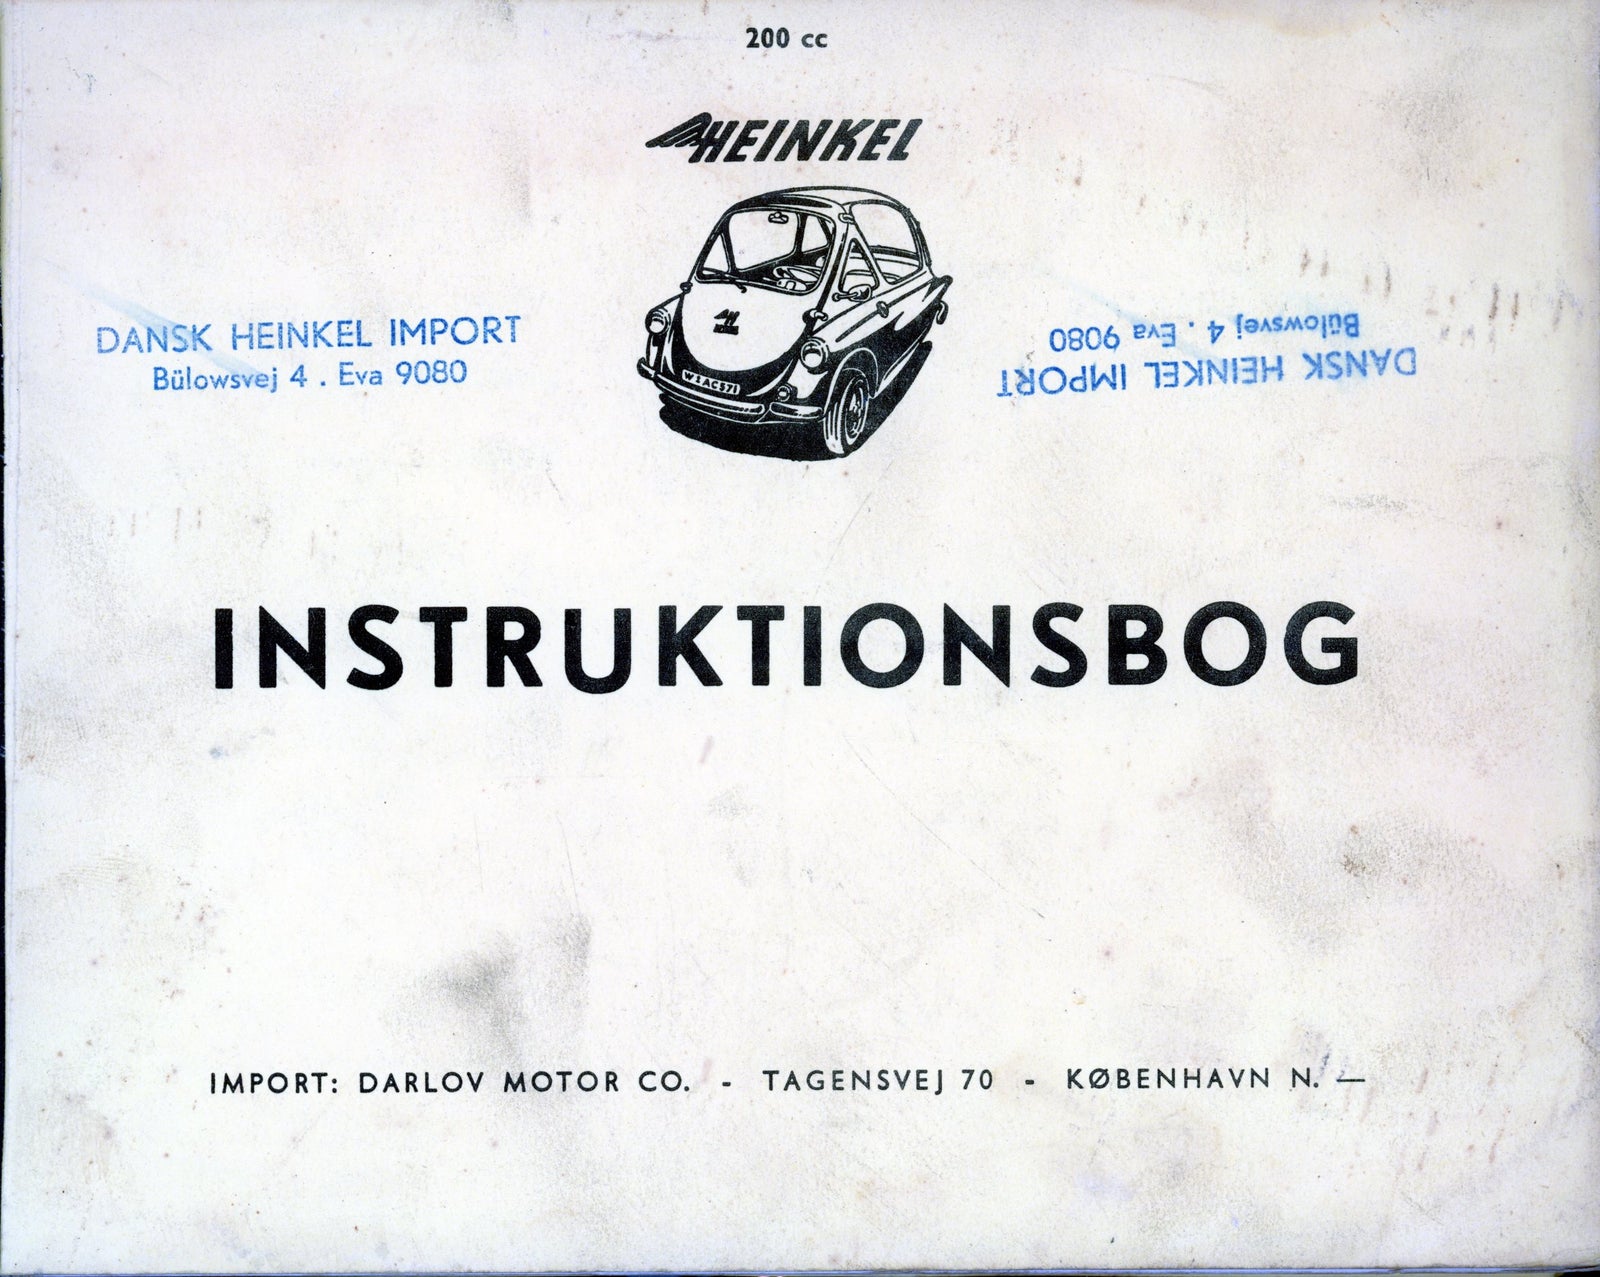 Heinkel instruktionsbog